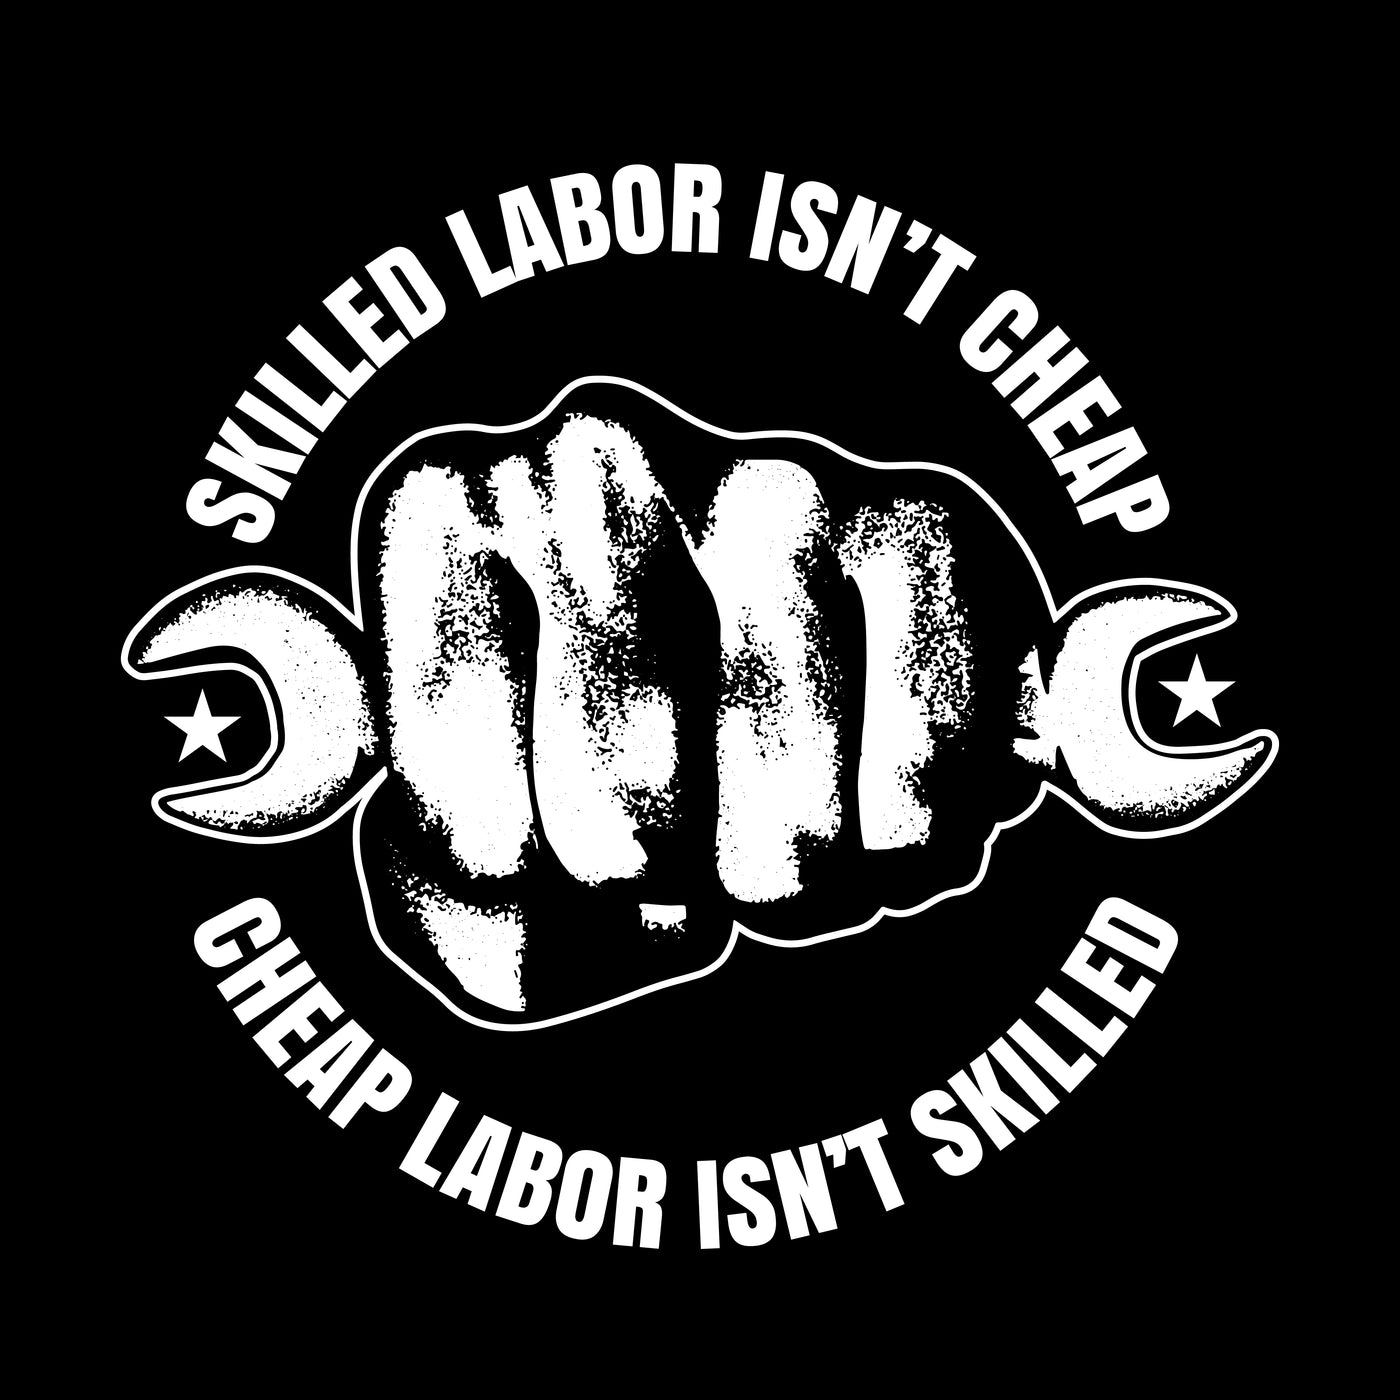 Skilled Labor 2